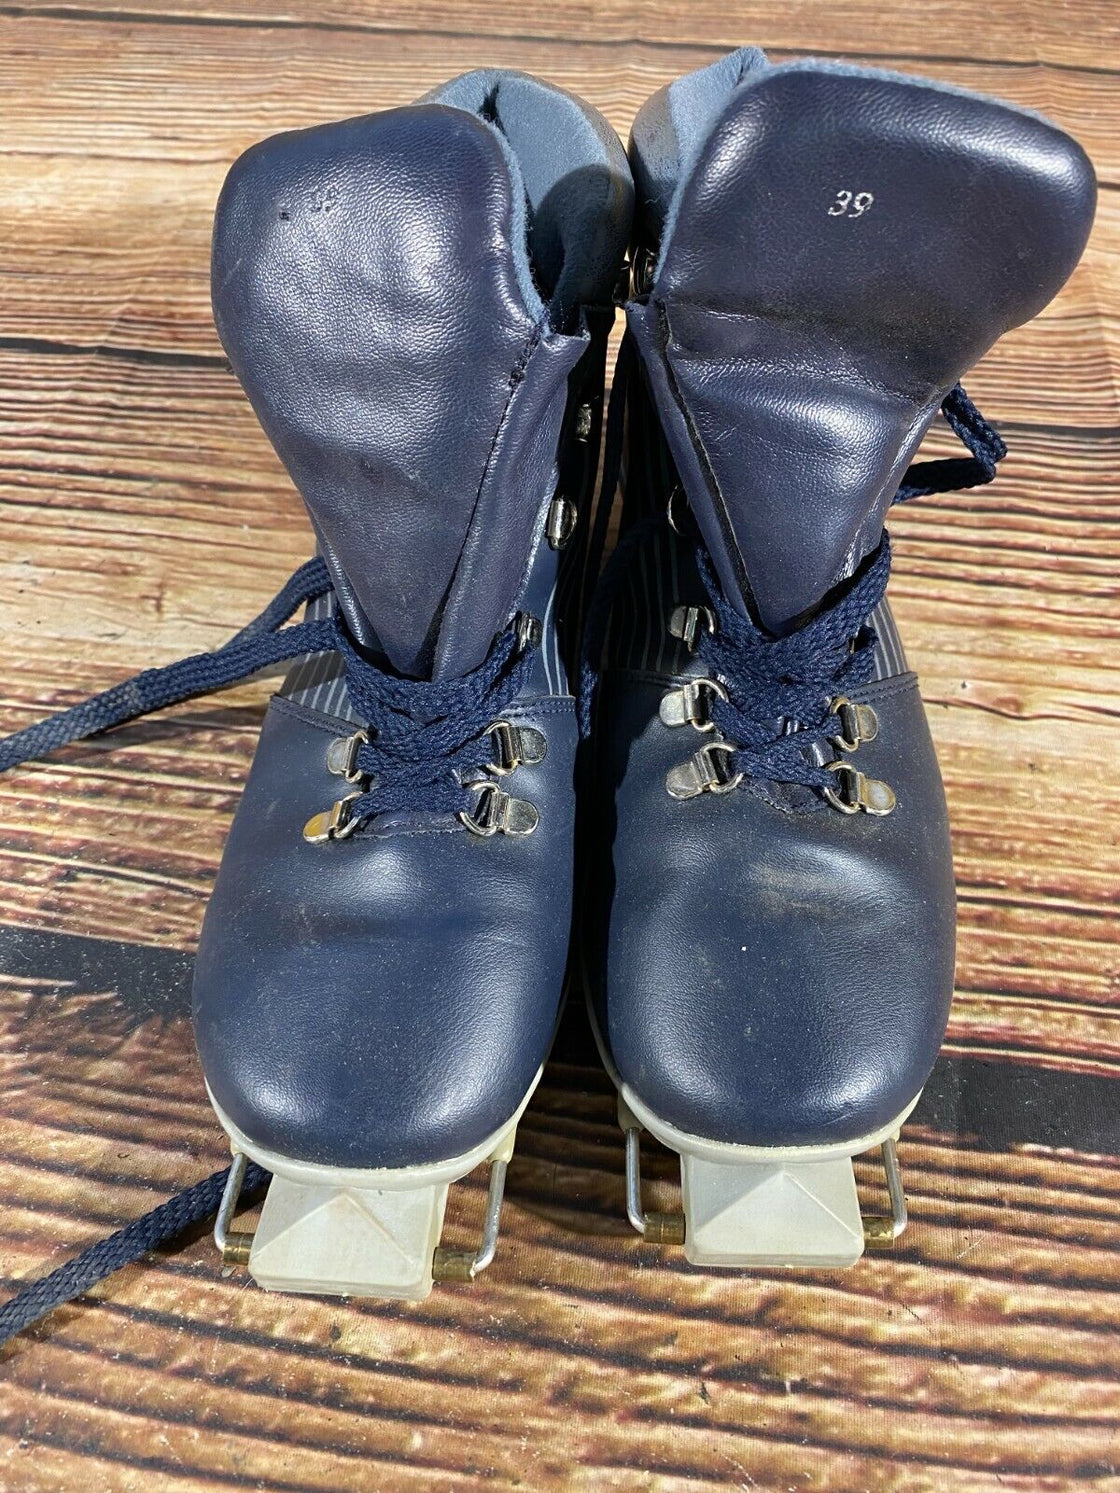 RAMY Vintage Nordic Cross Country Ski Boots EU39, US6 for RAMY Bindings